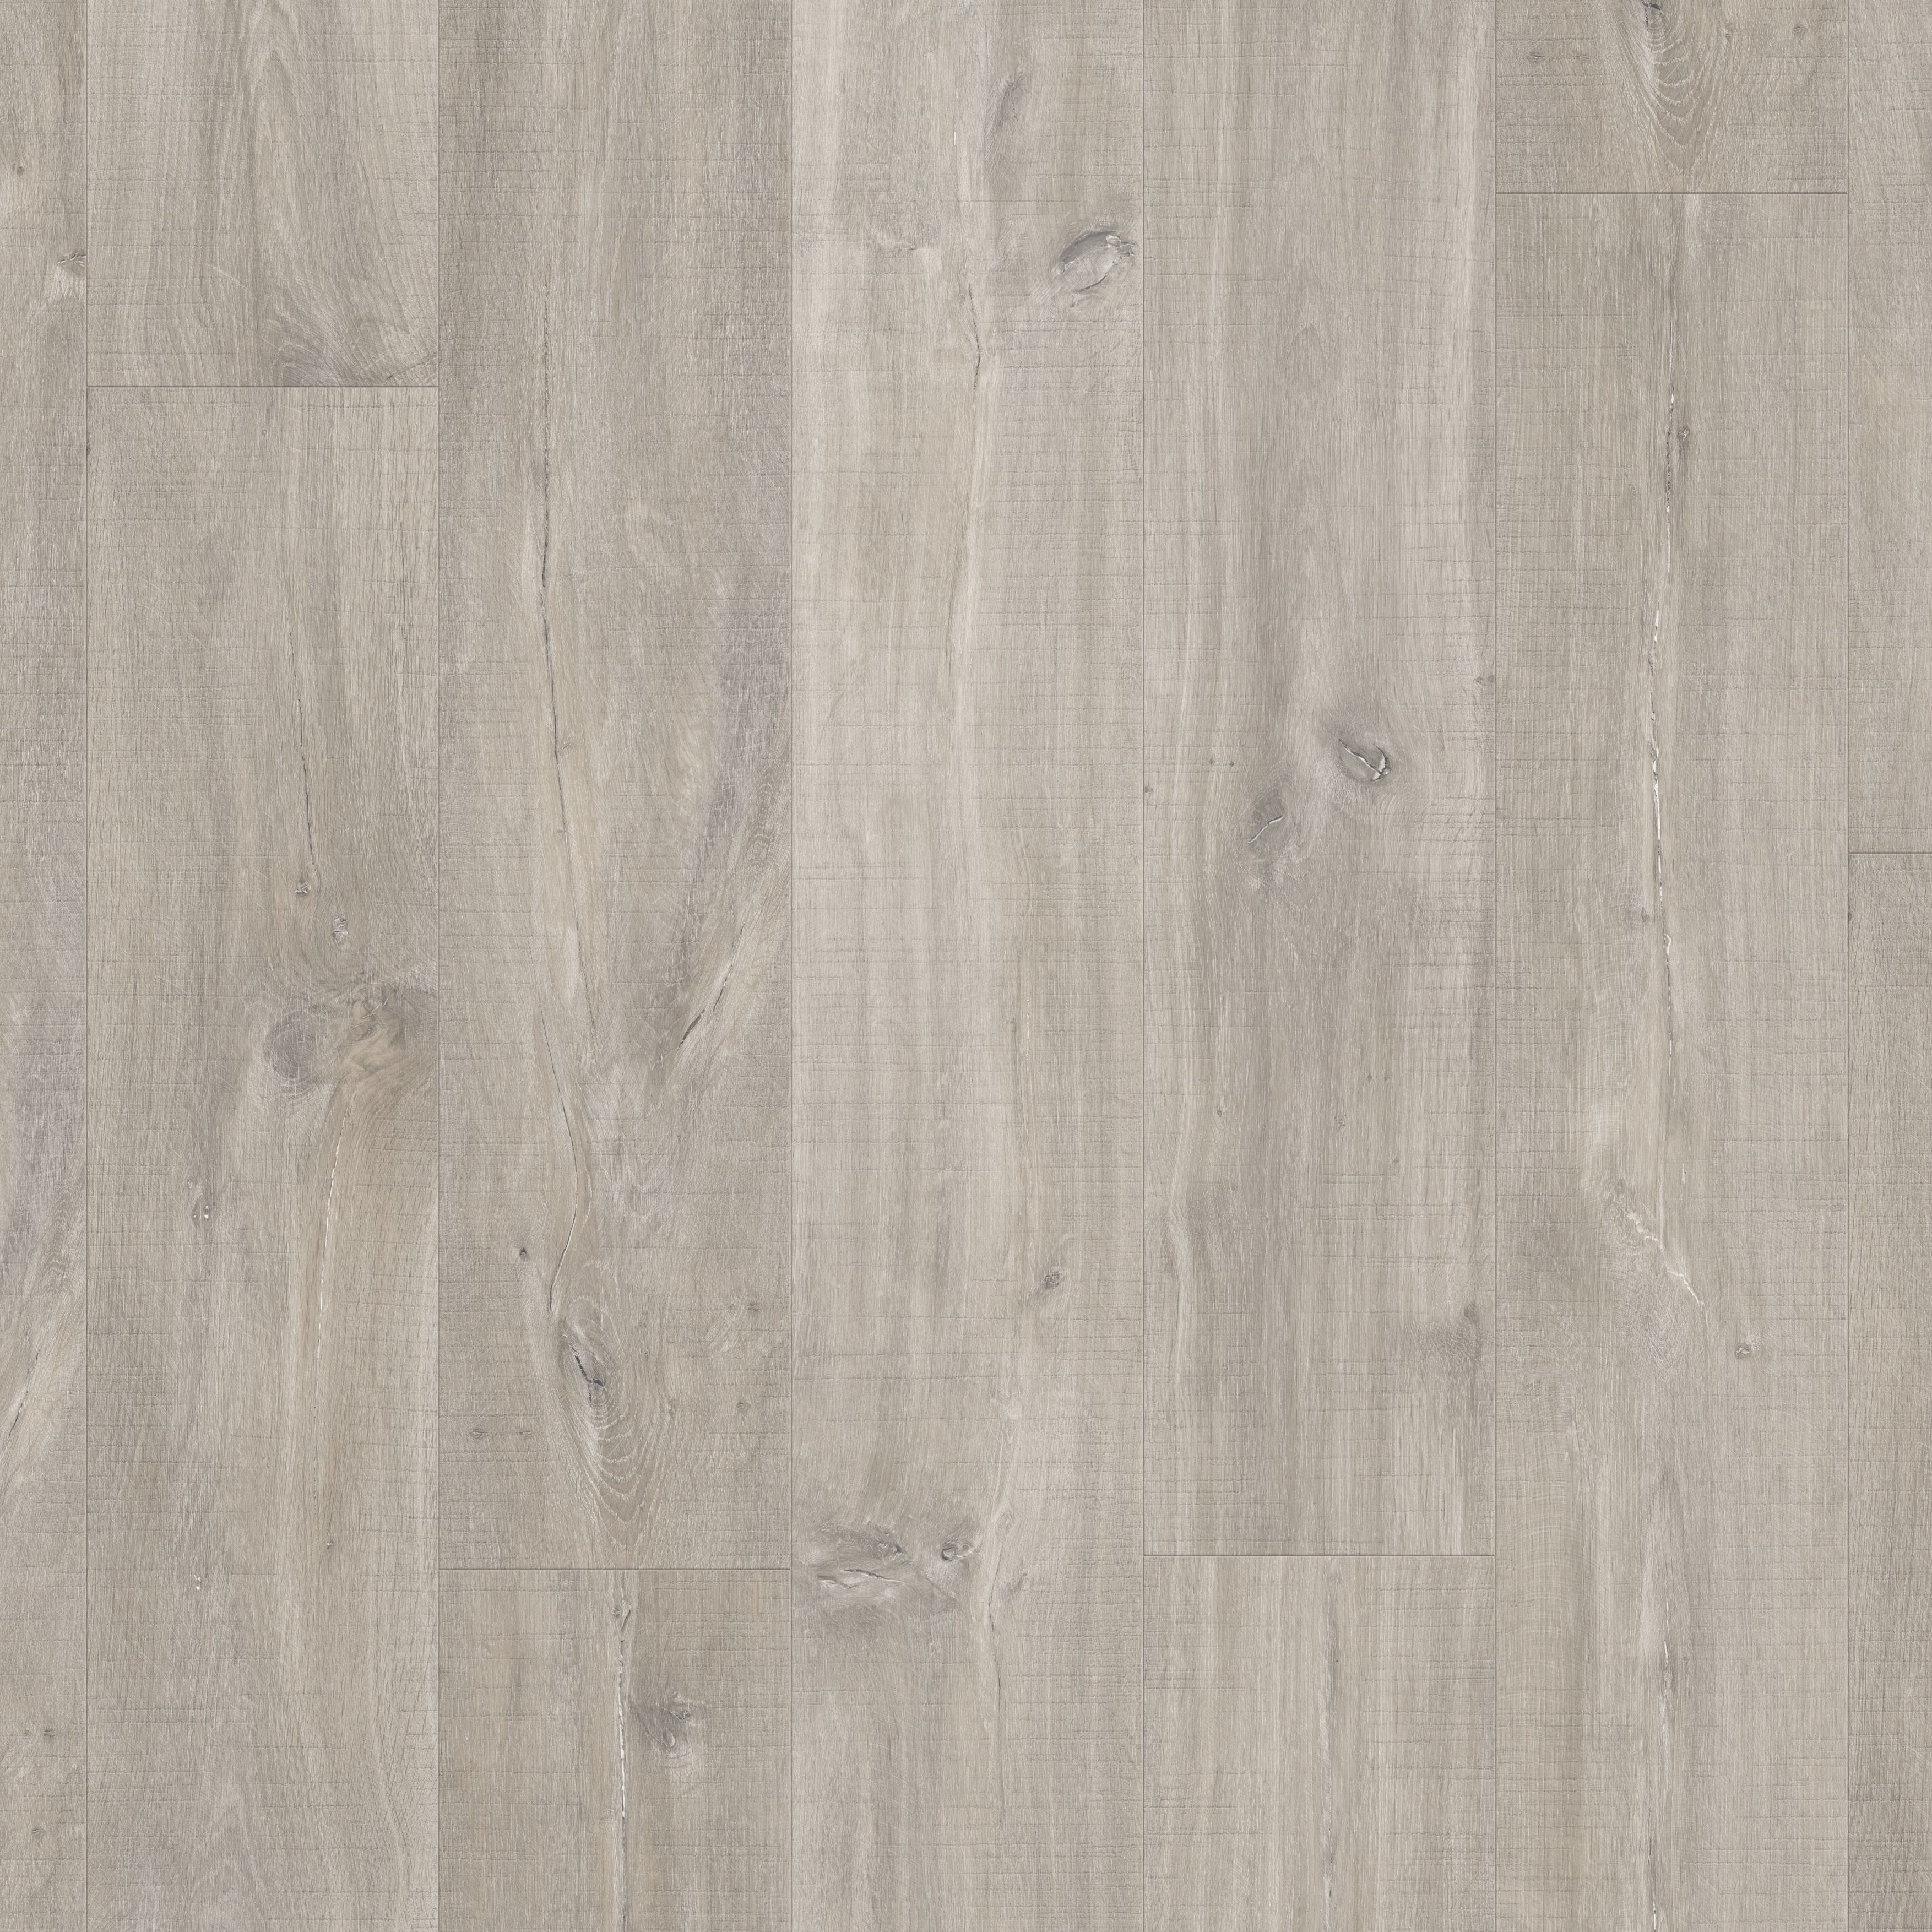 Goodhome Bachata Natural Wood Effect Luxury Vinyl Click Flooring 2 56m Pack Departments Diy At B Q